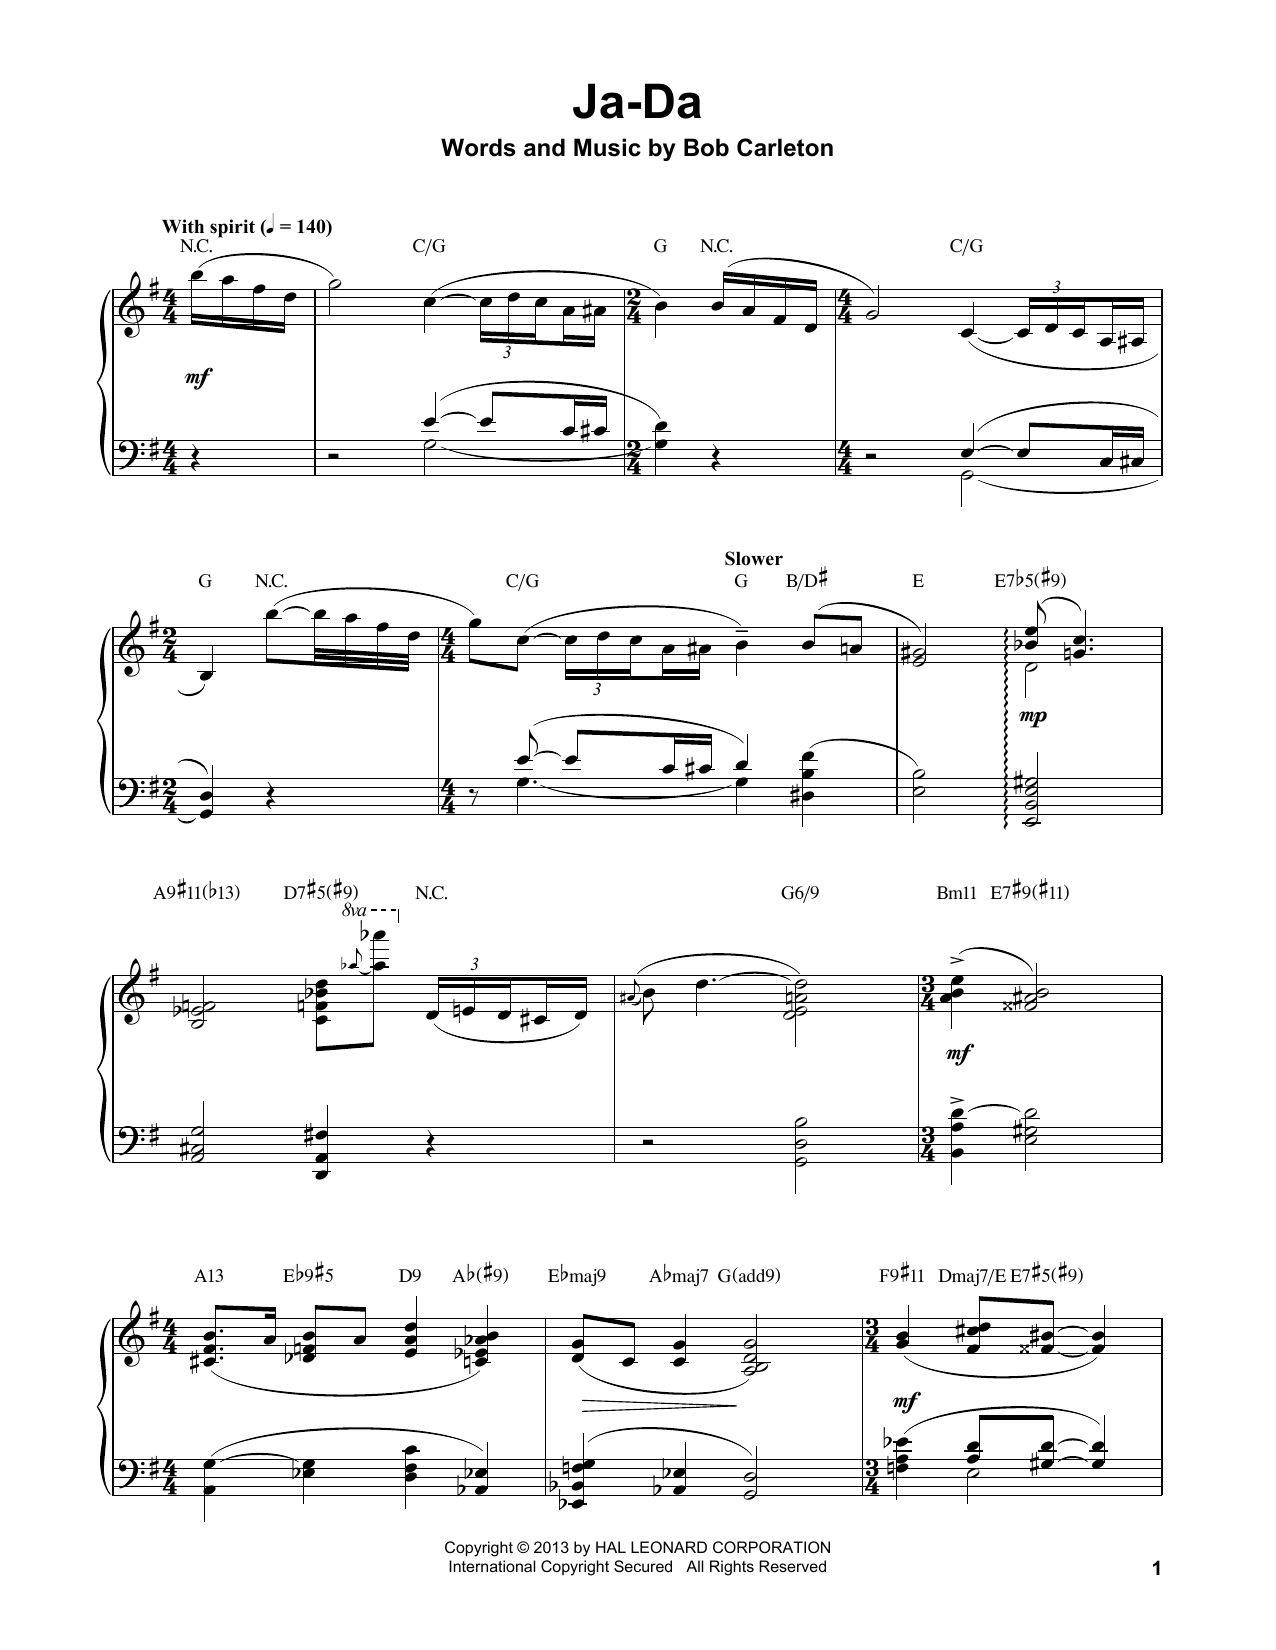 Oscar Peterson Ja-Da Sheet Music Notes & Chords for Piano Transcription - Download or Print PDF